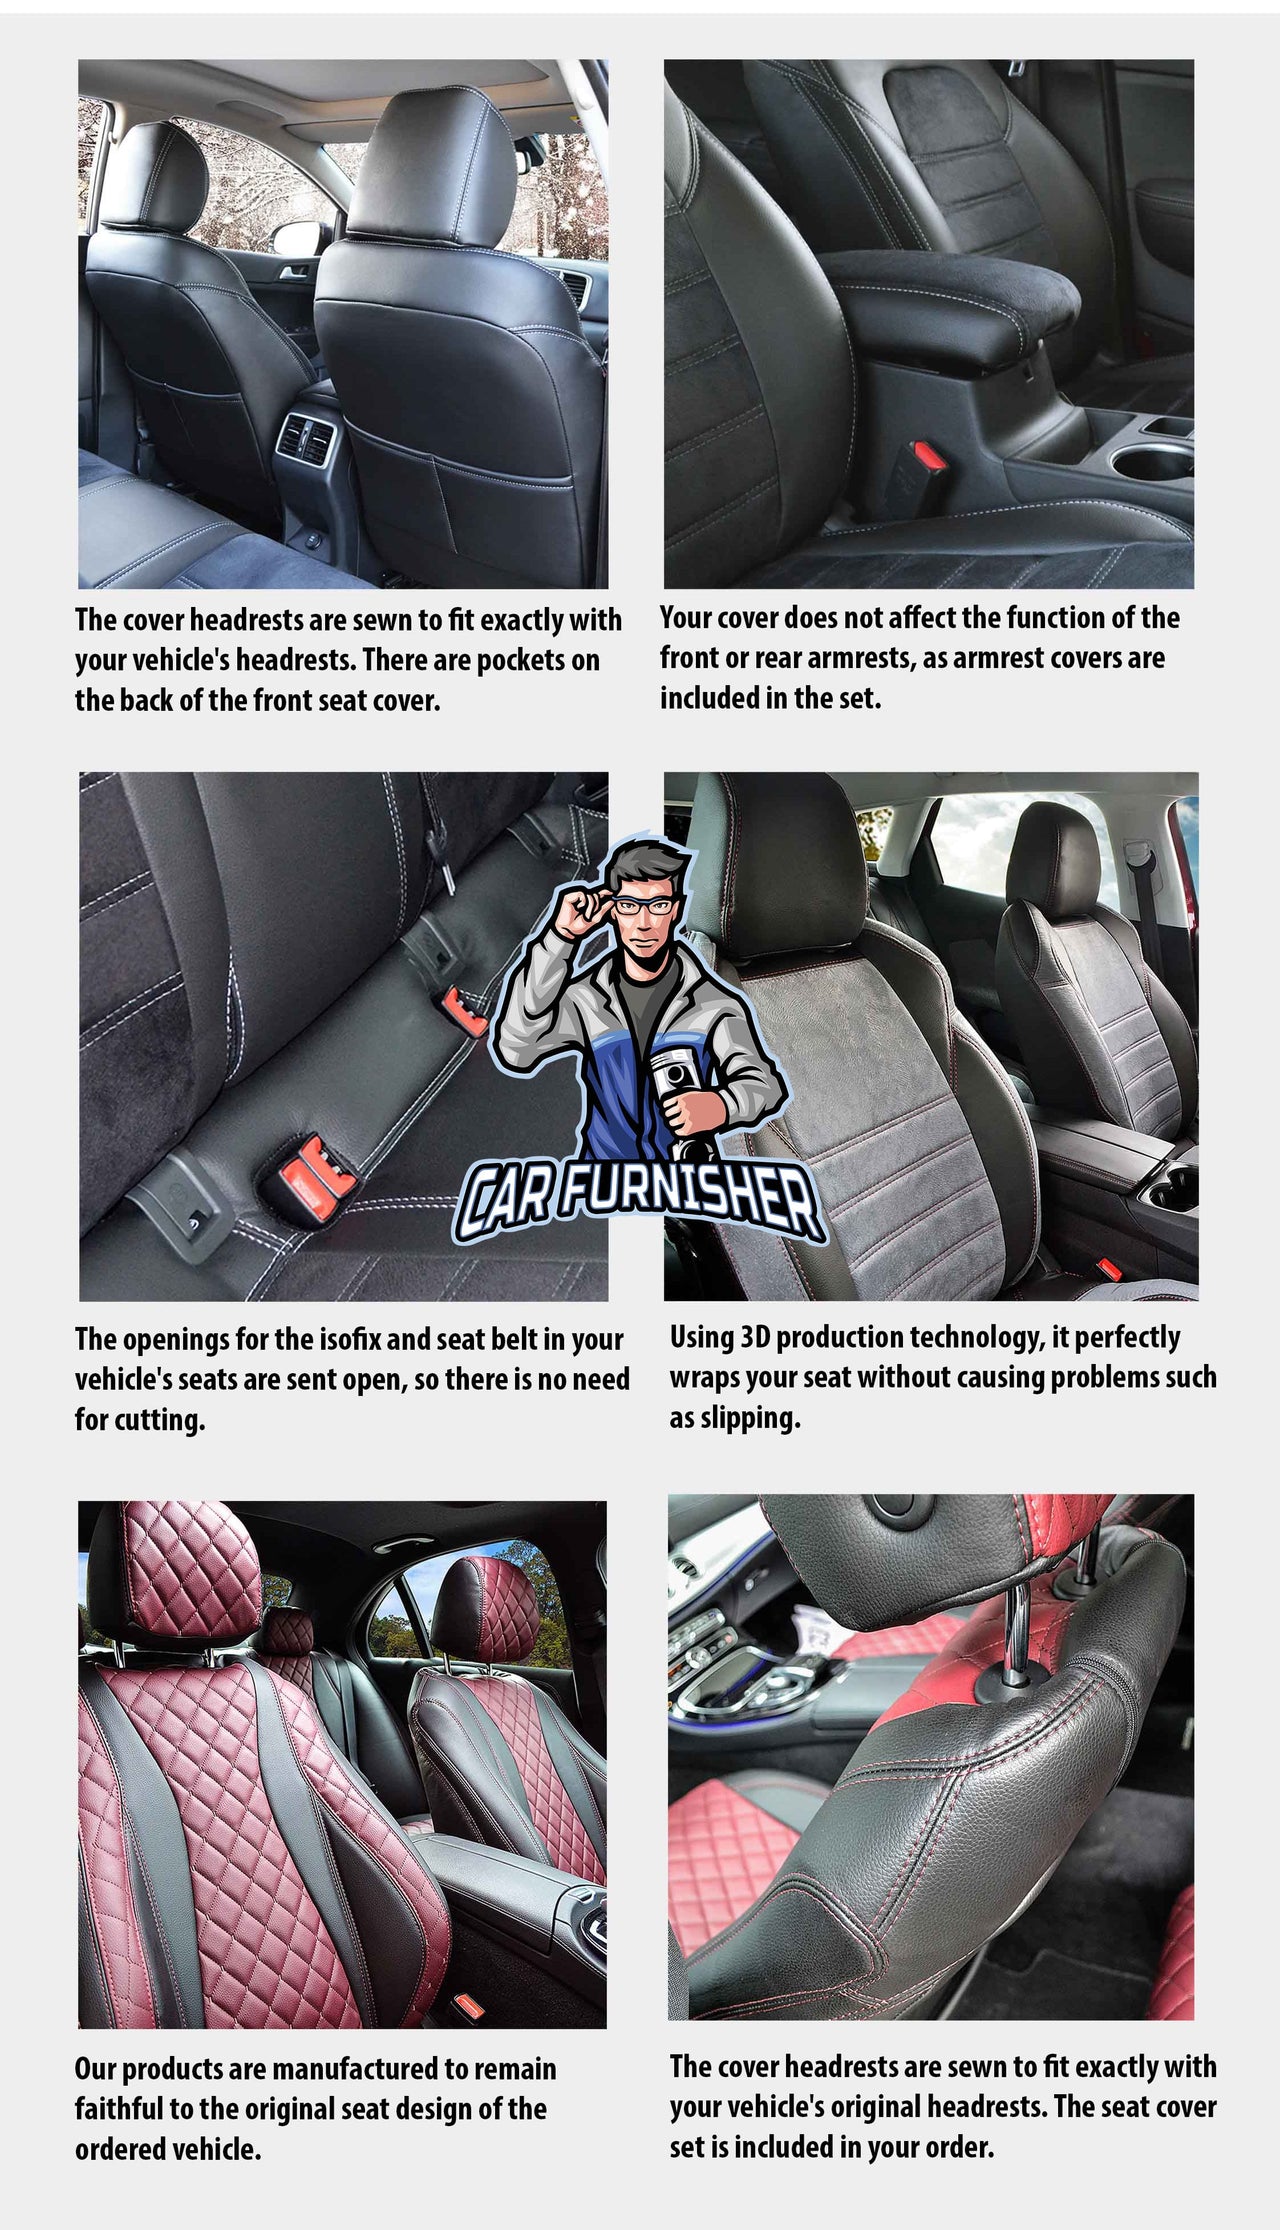 Dodge Nitro Seat Cover Milano Suede Design Burgundy Leather & Suede Fabric